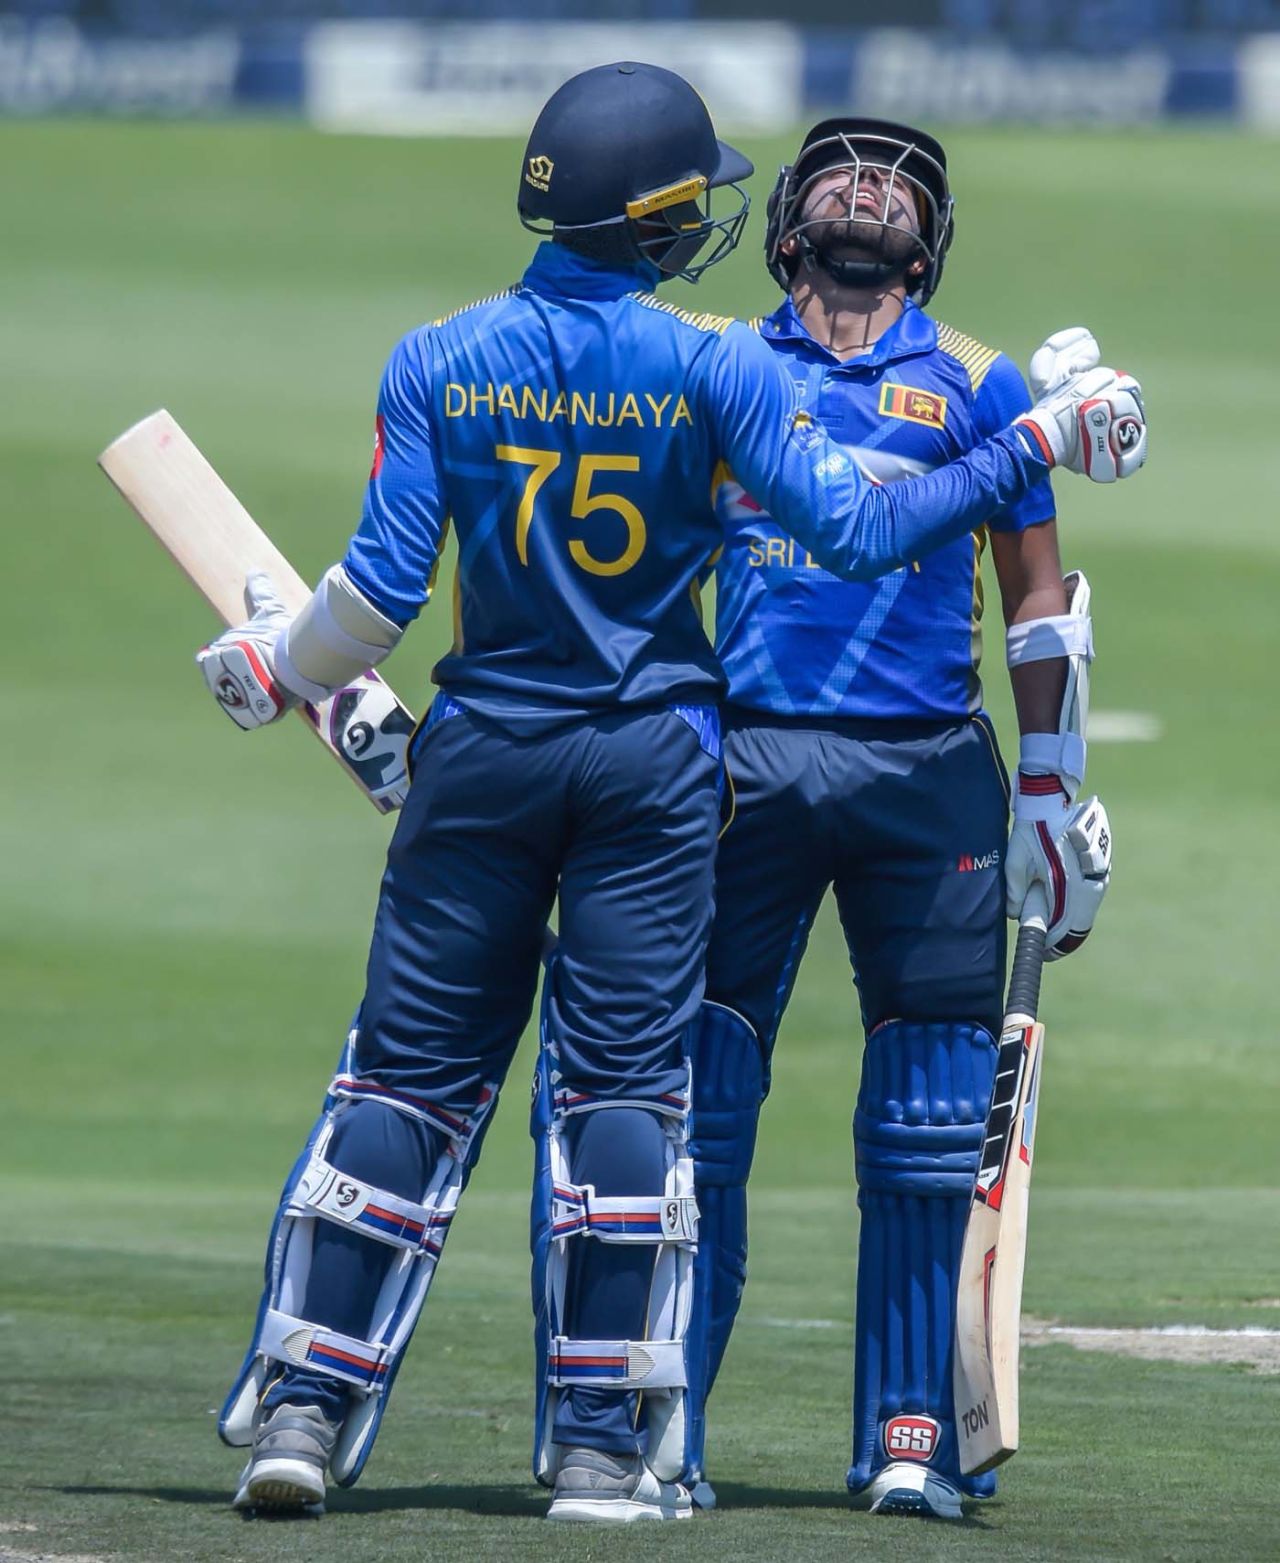 Dhananjaya de Silva congratulates Kusal Mendis on getting to his half-century, South Africa v Sri Lanka, 1st ODI, Johannesburg, March 3, 2019